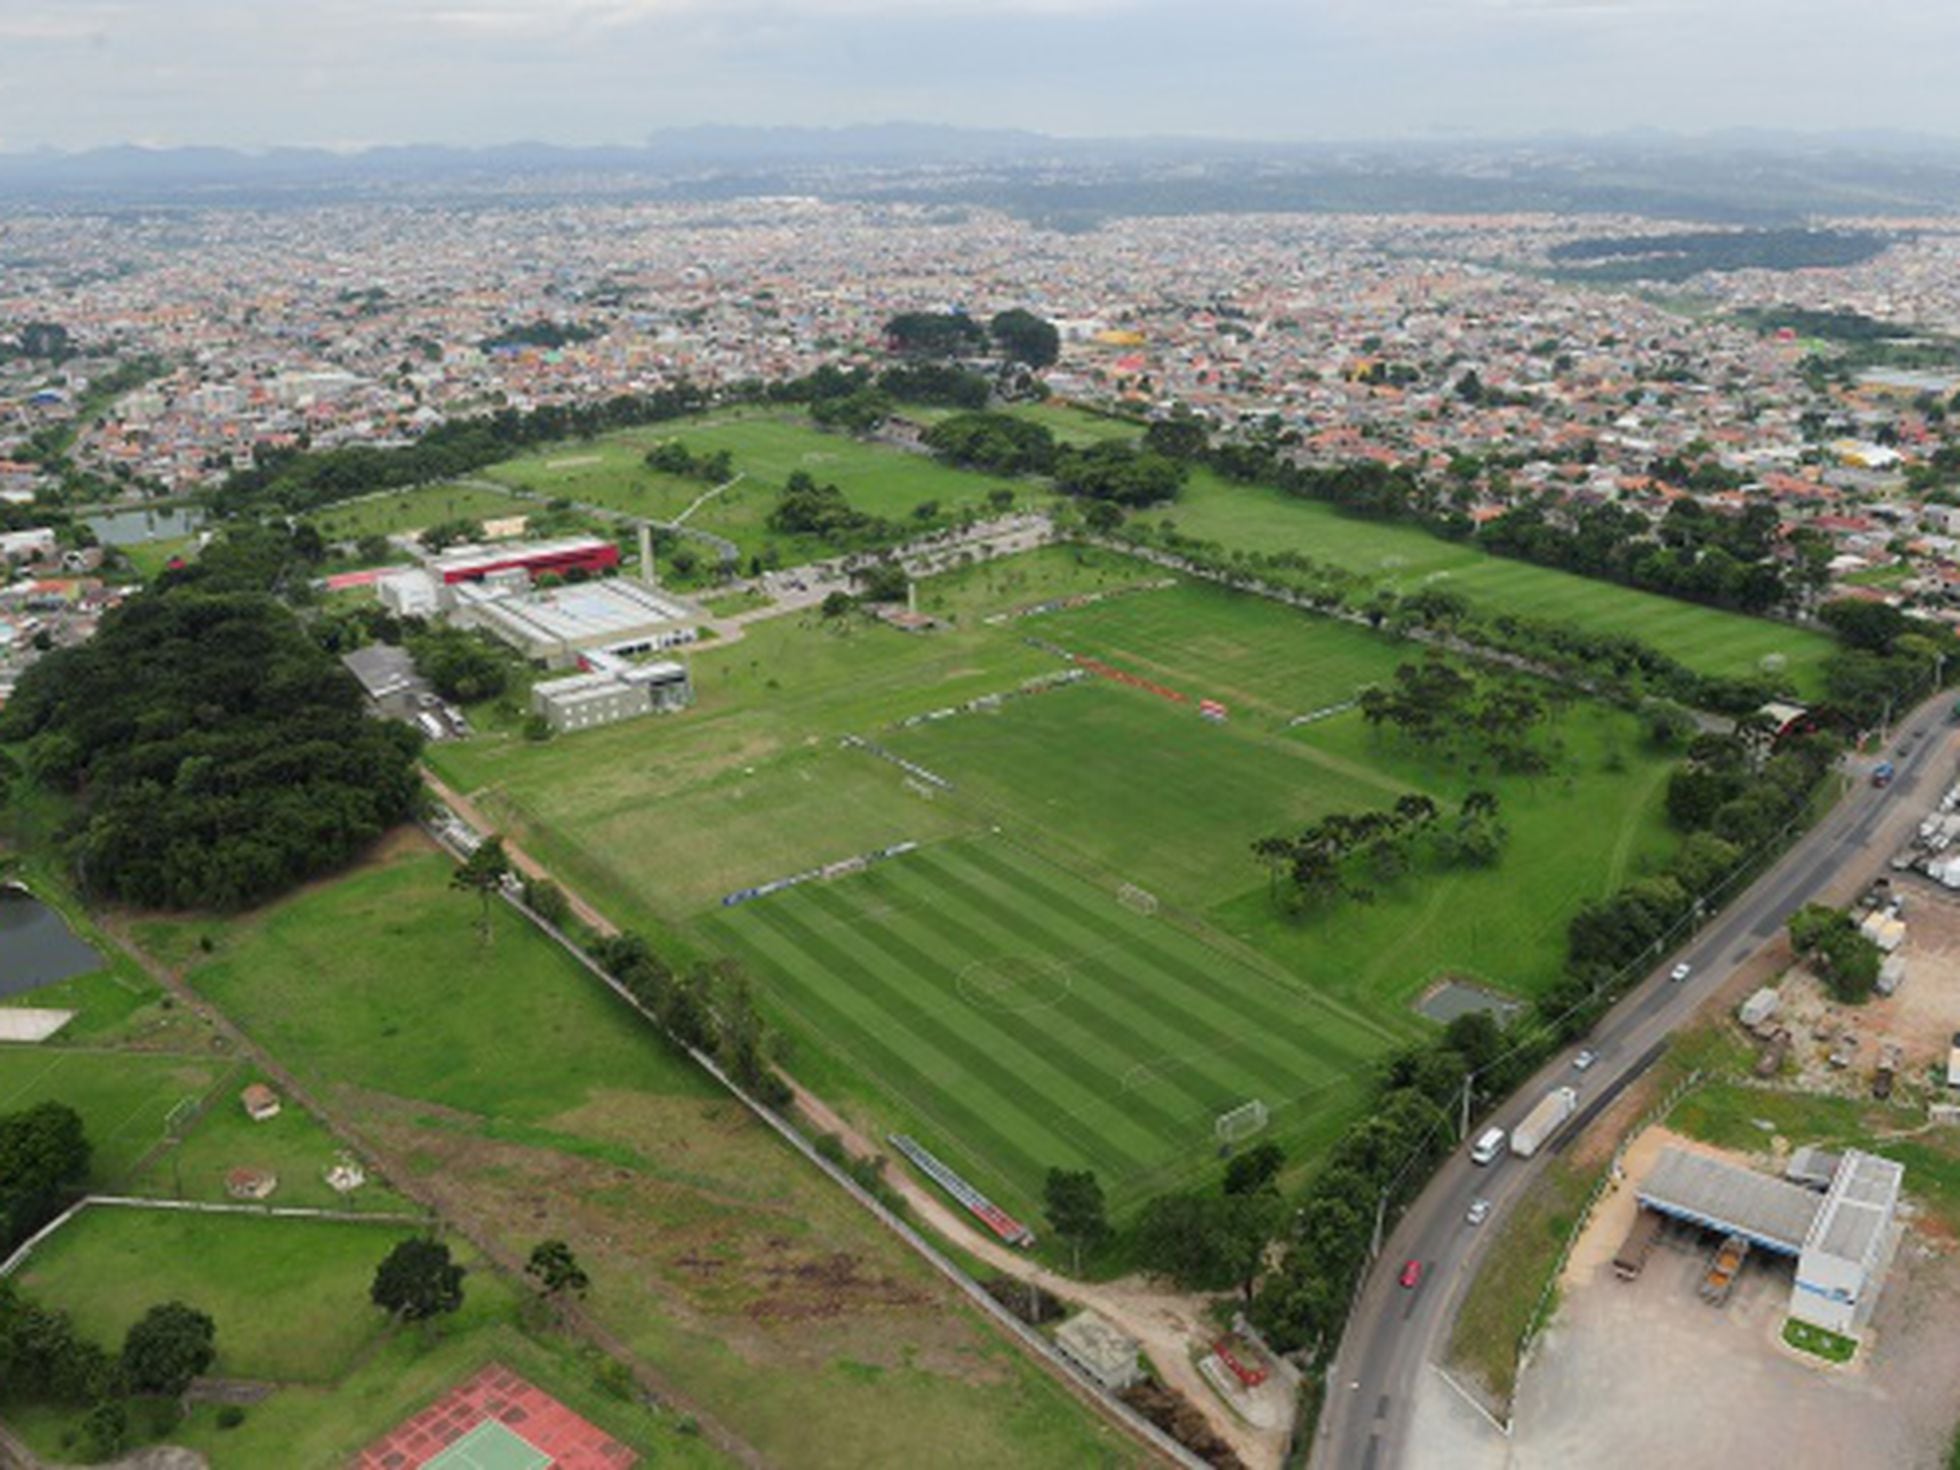 Prefeitura de Curitiba - Viu só, FIFA? Curitiba possui o Centro de